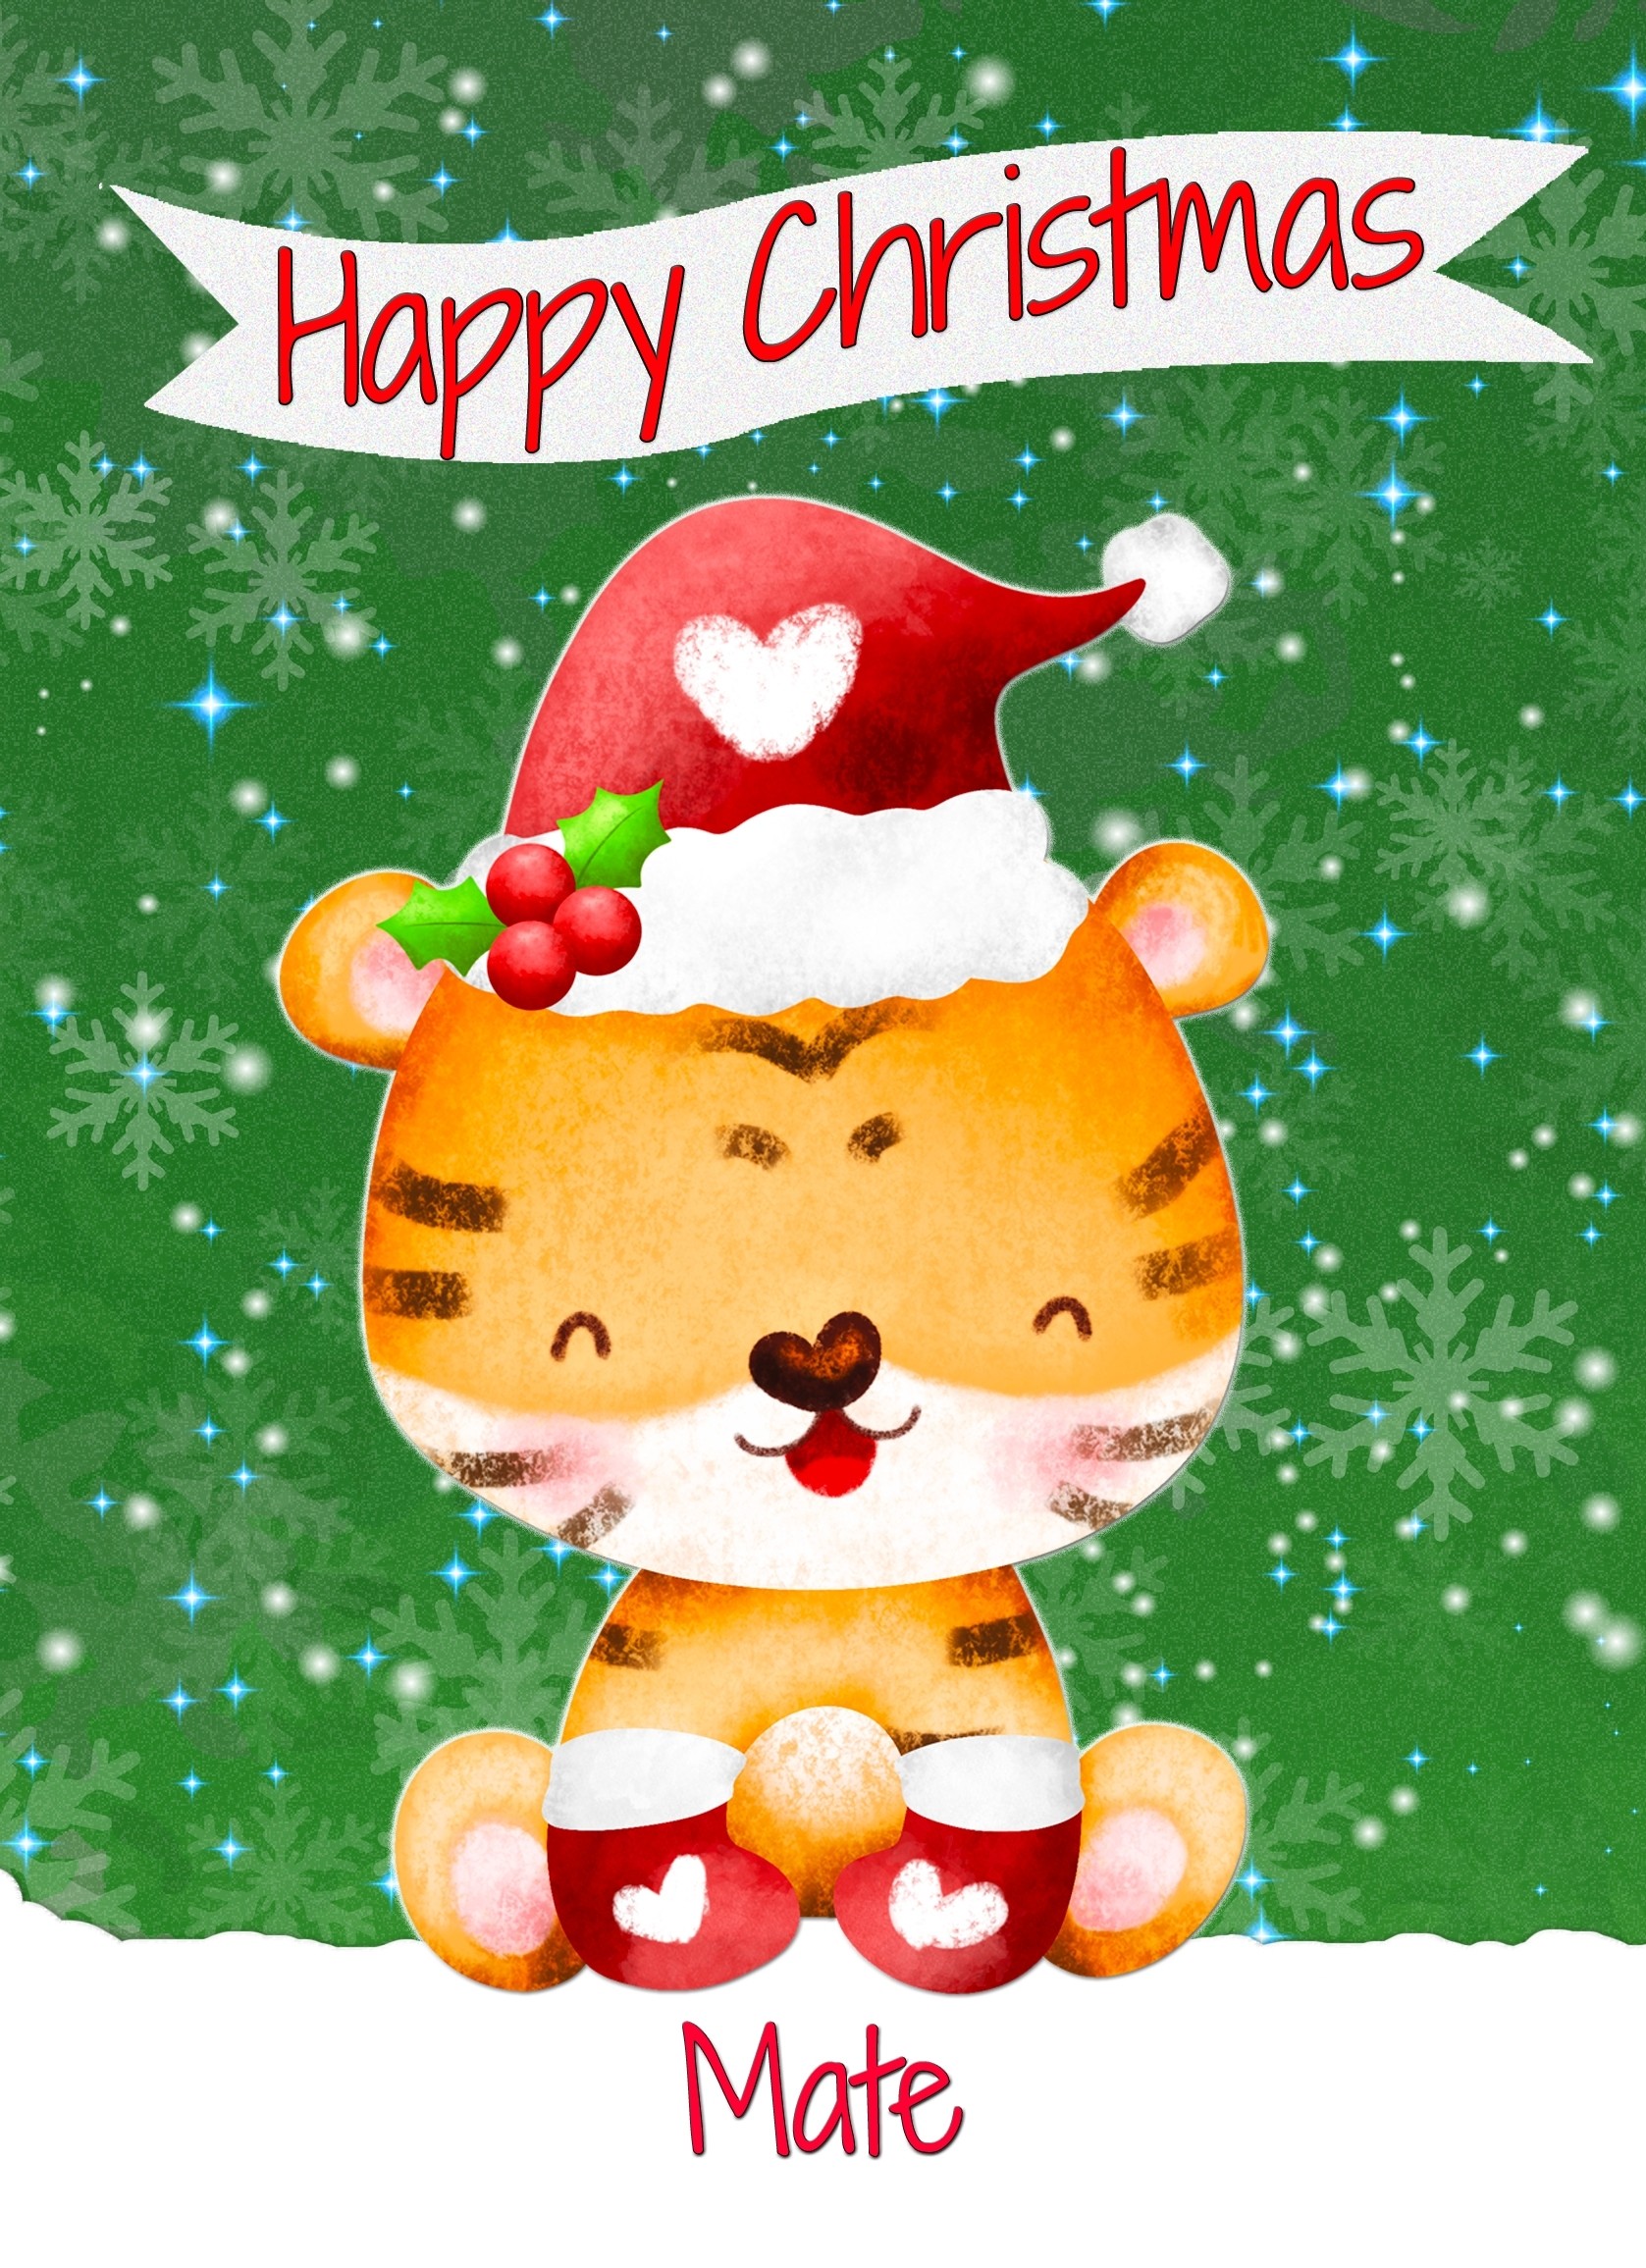 Christmas Card For Mate (Happy Christmas, Tiger)